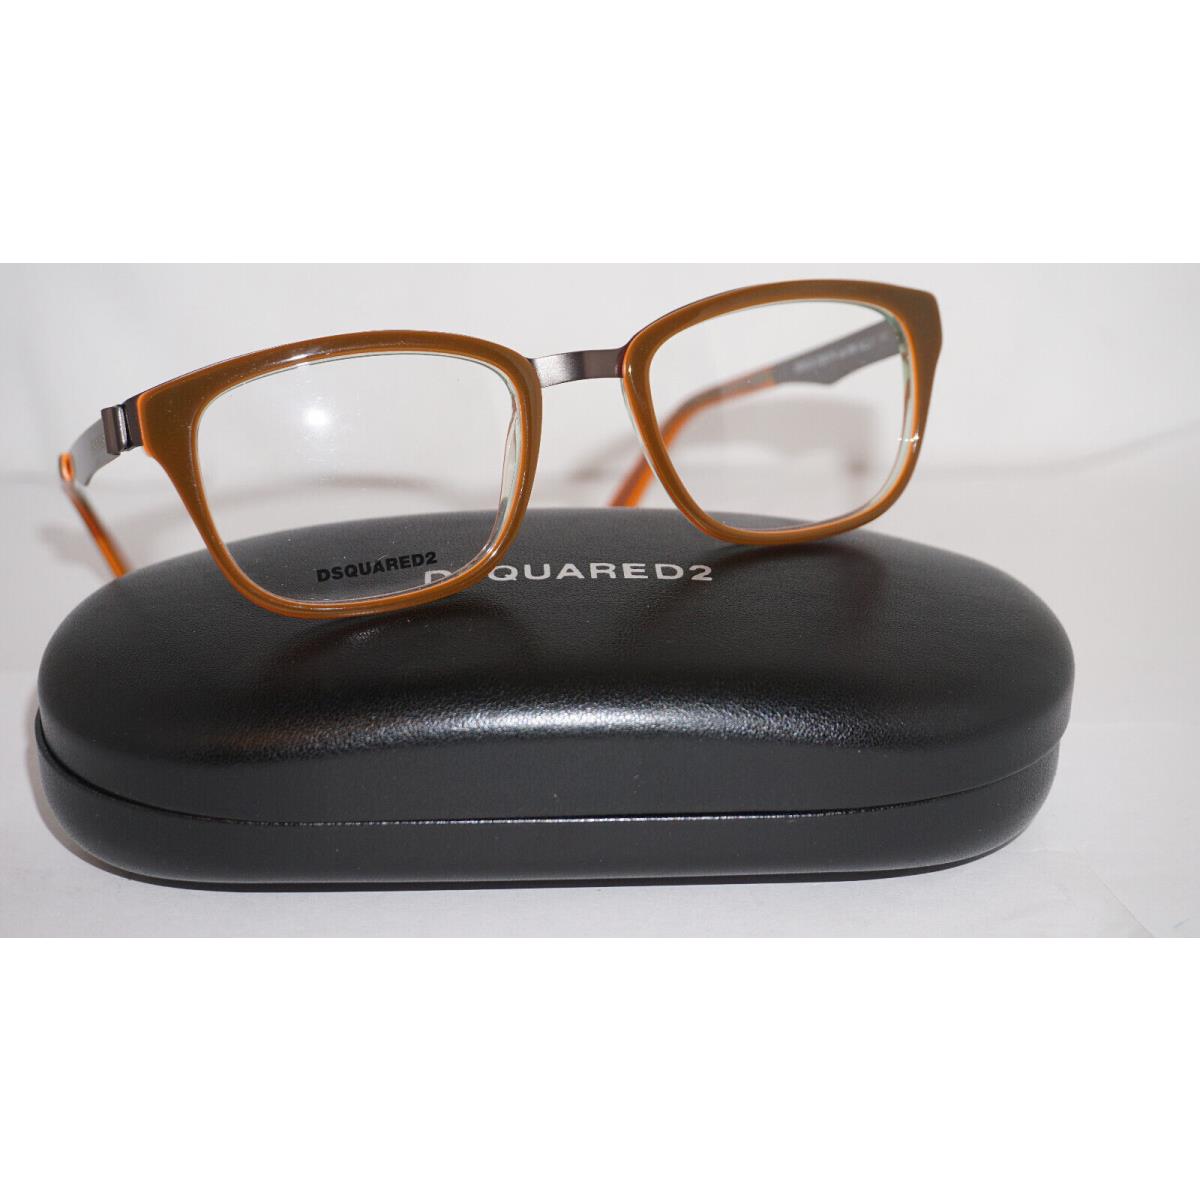 DSQUARED2 Eyeglasses Berlin Brown Orange DQ5174 098 50 20 140